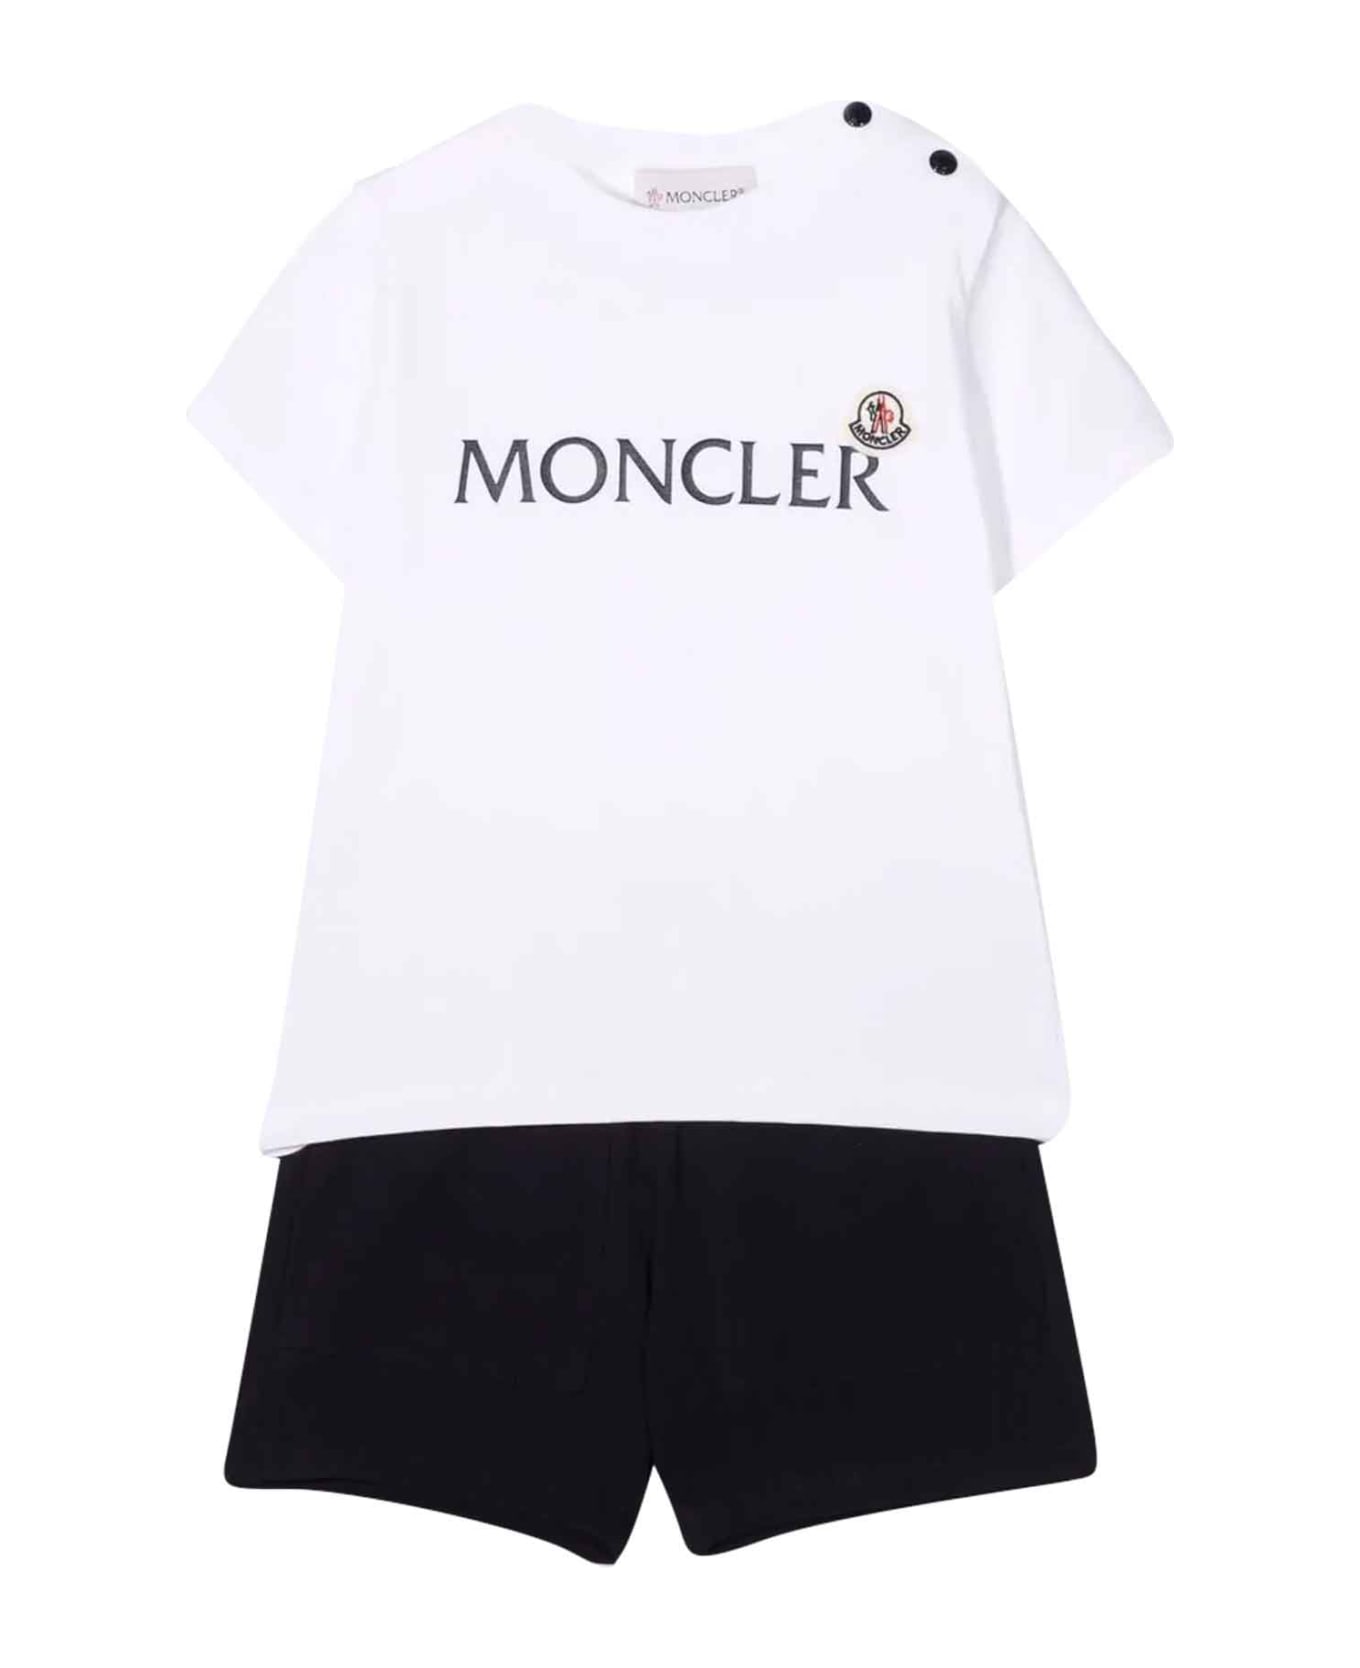 Moncler Unisex Baby Sports Suit - Bianco